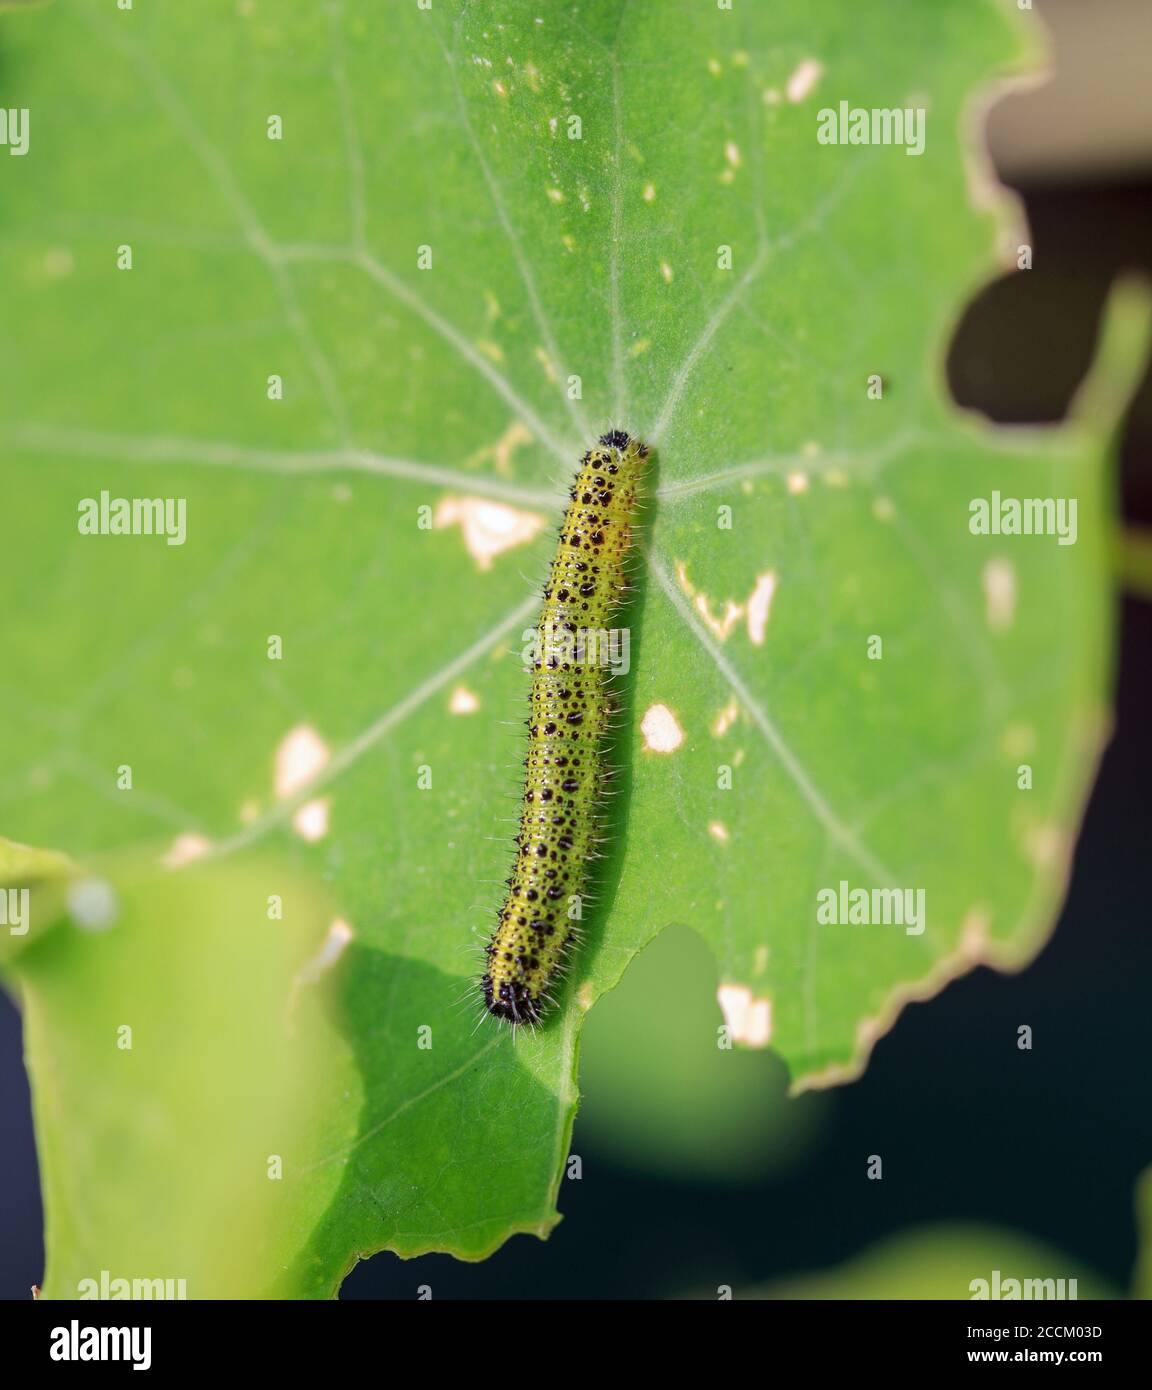 White Cabbage caterpillar on a lush green nasturtium leaf Stock Photo